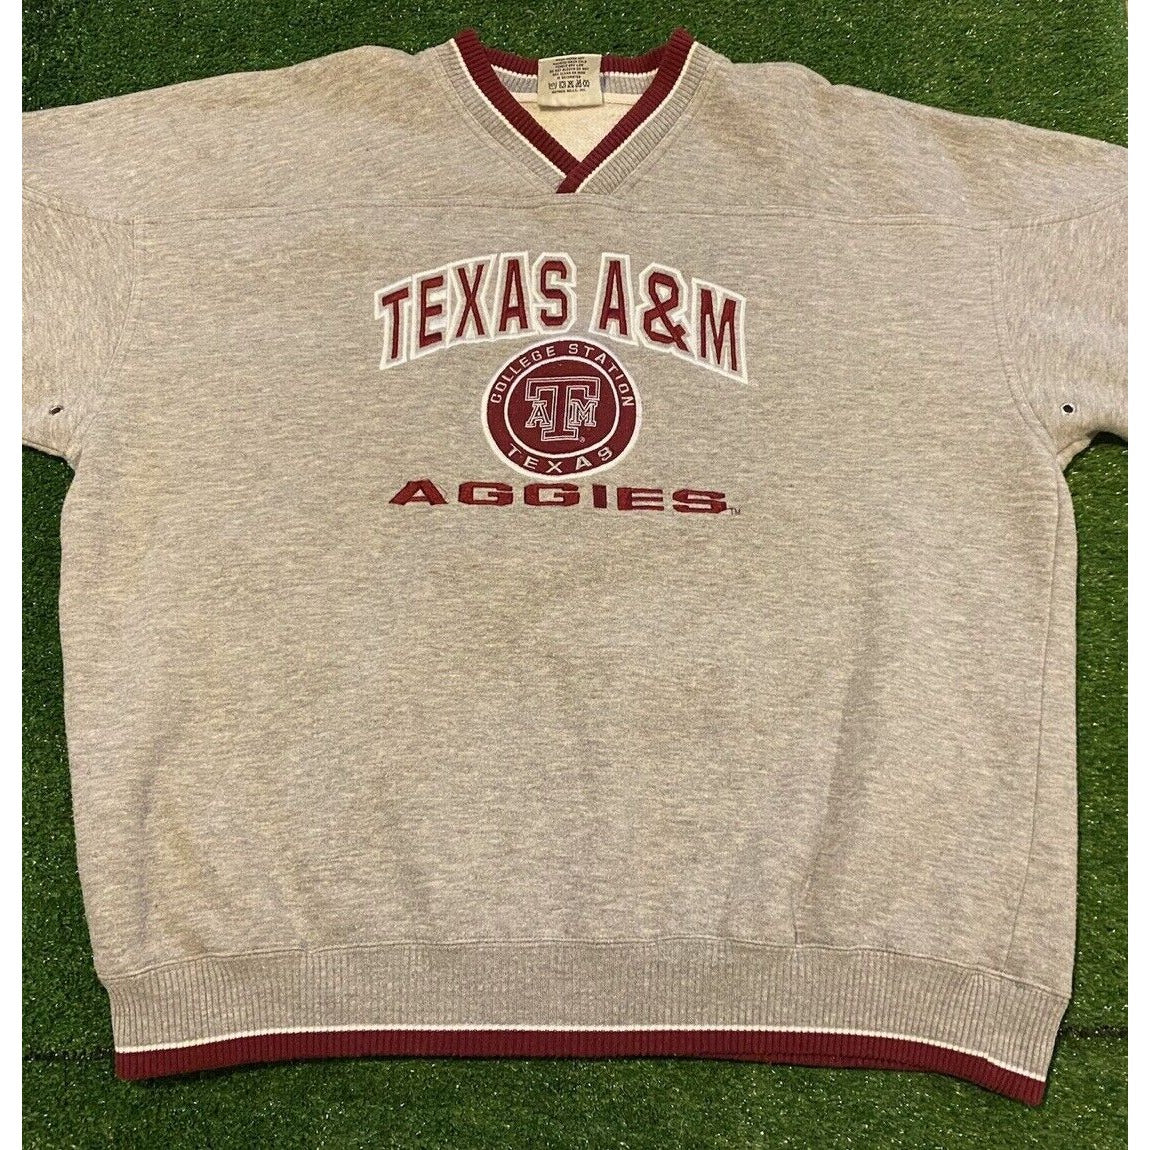 Vintage Texas A&M Aggies sweatshirt extra large crew neck Lee Sport gray mens